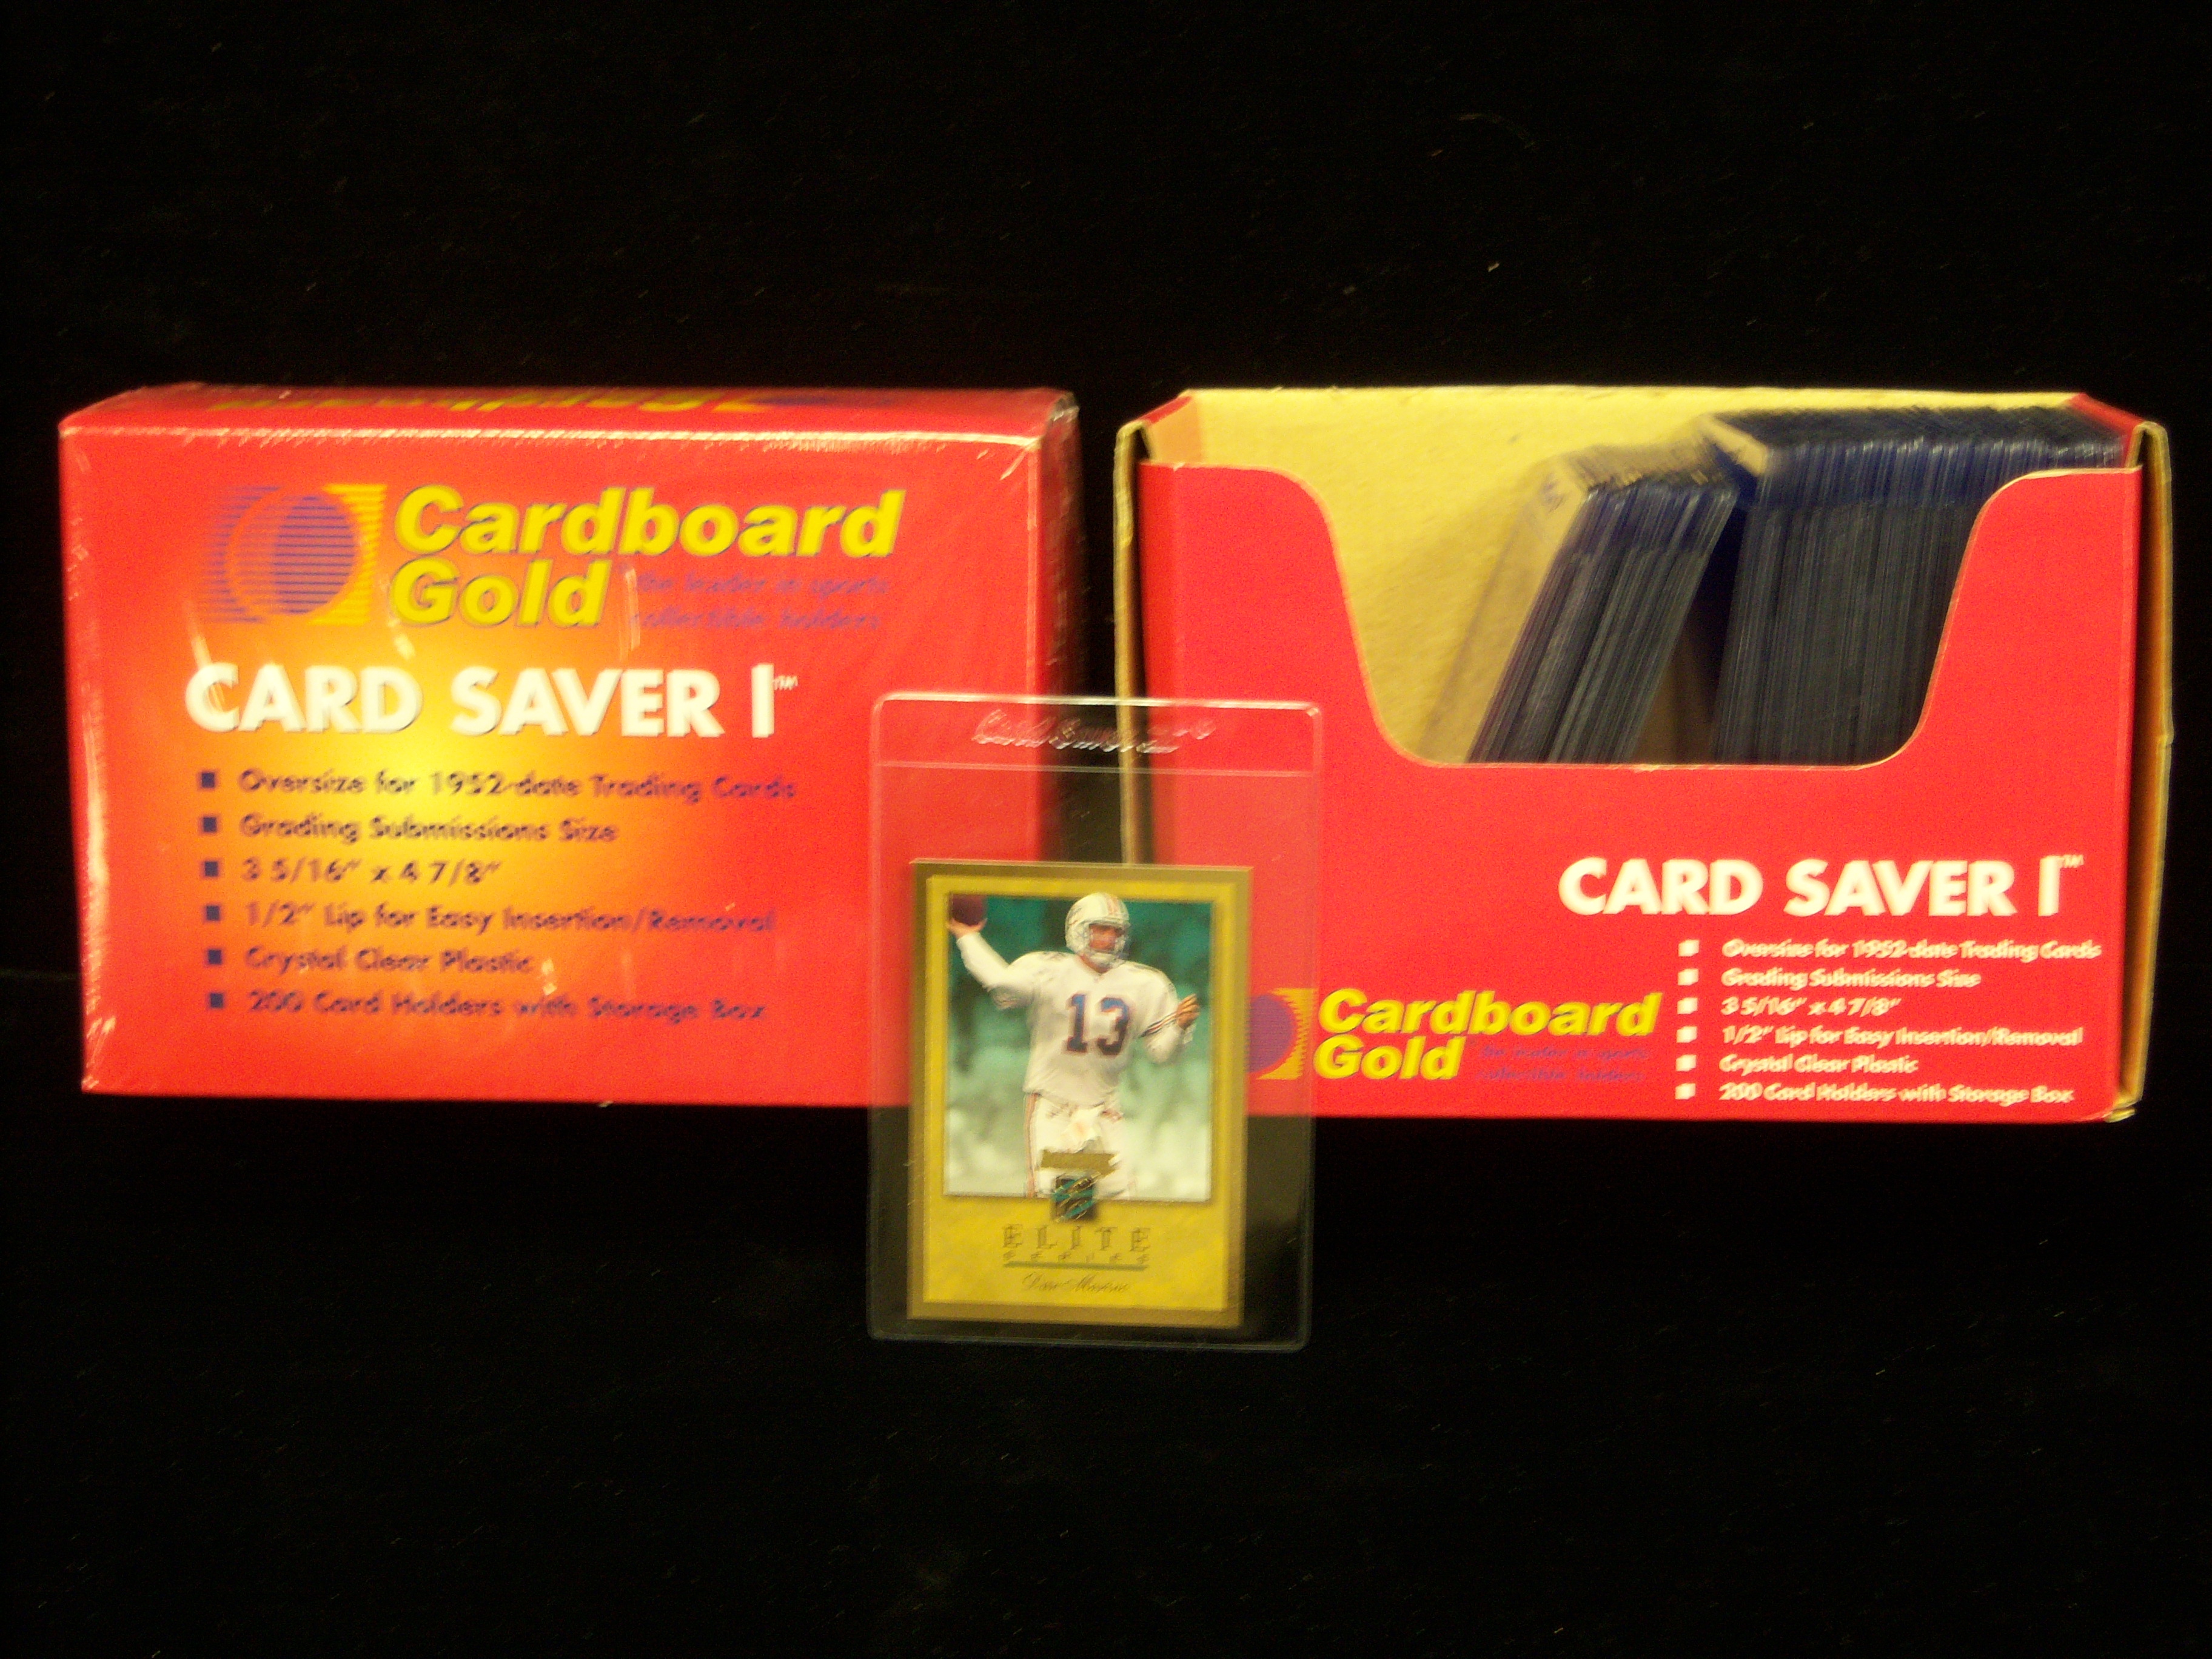 Cardboard Gold Card Saver 1 Semi Rigid Card Holder 3 5/16 x 4 7/8 (200  Count)